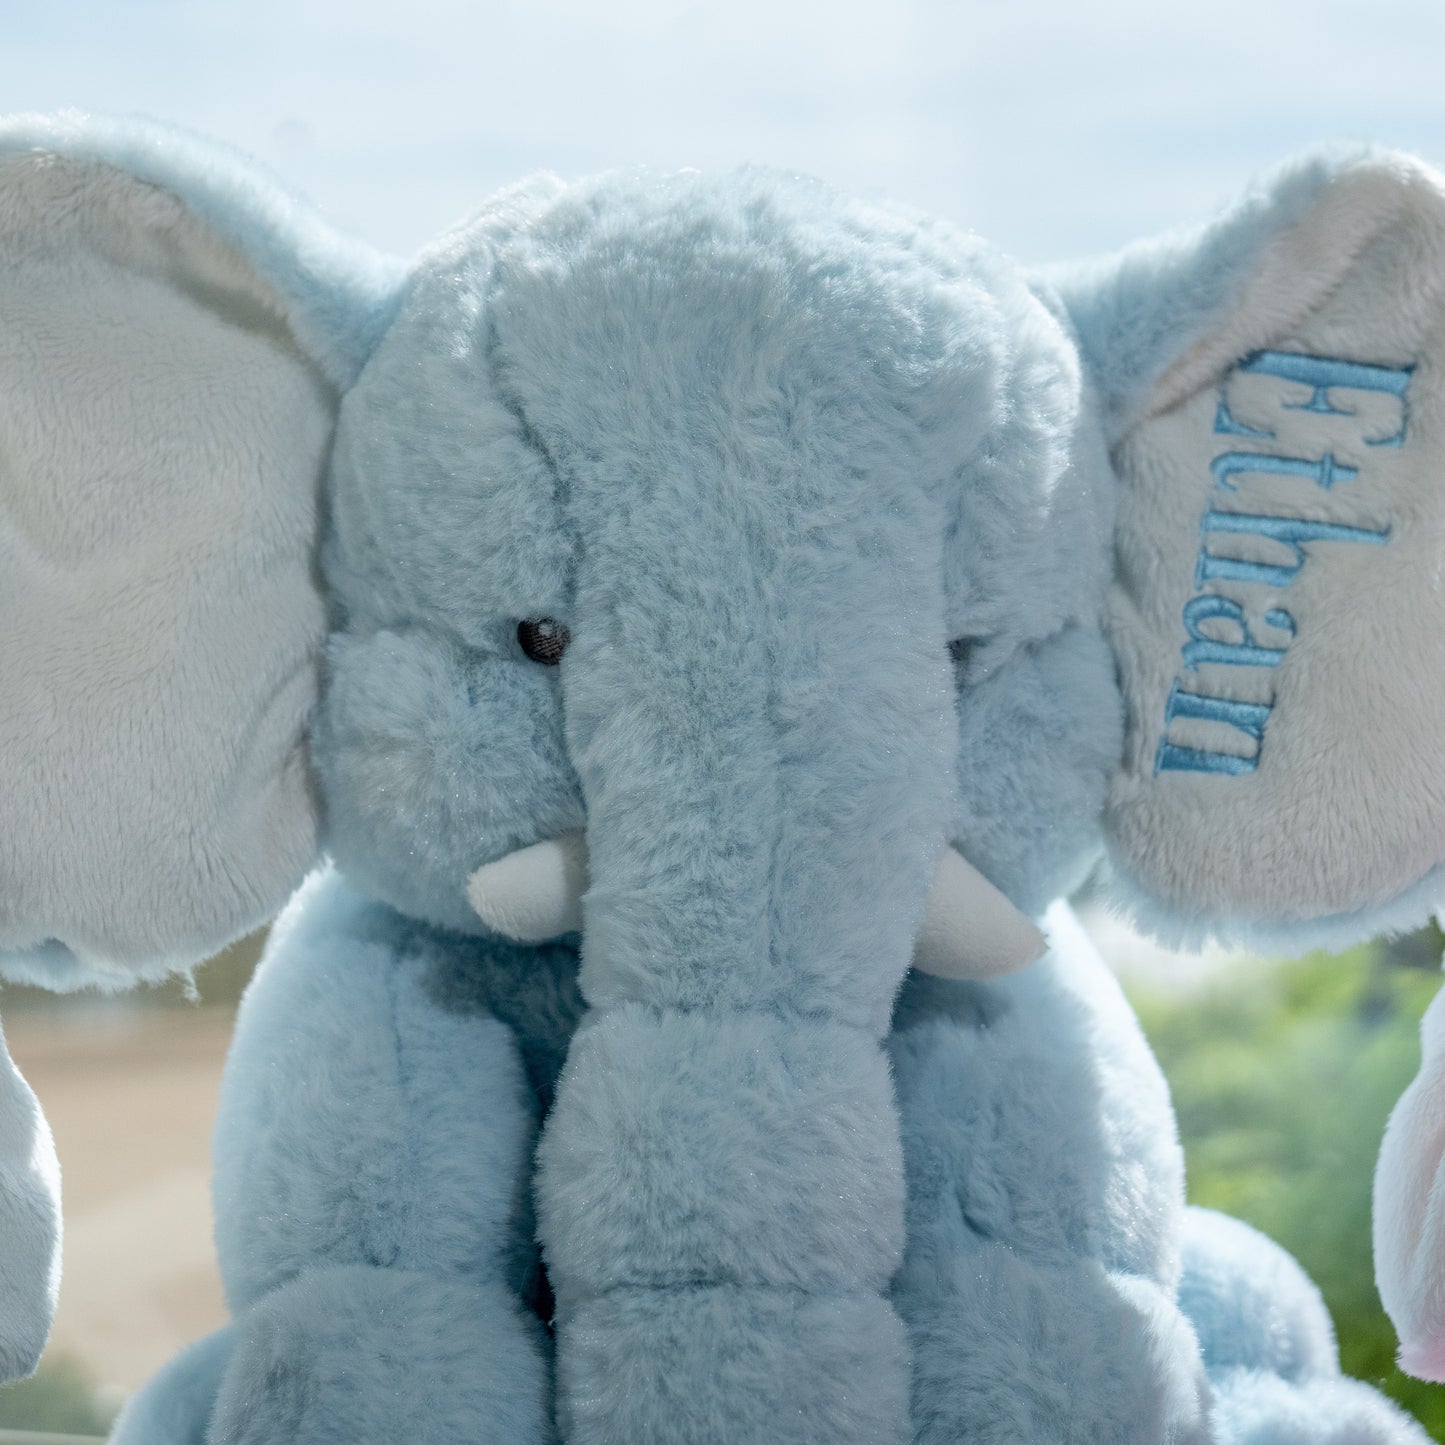 Personalized Plush Elephant - Jellybean